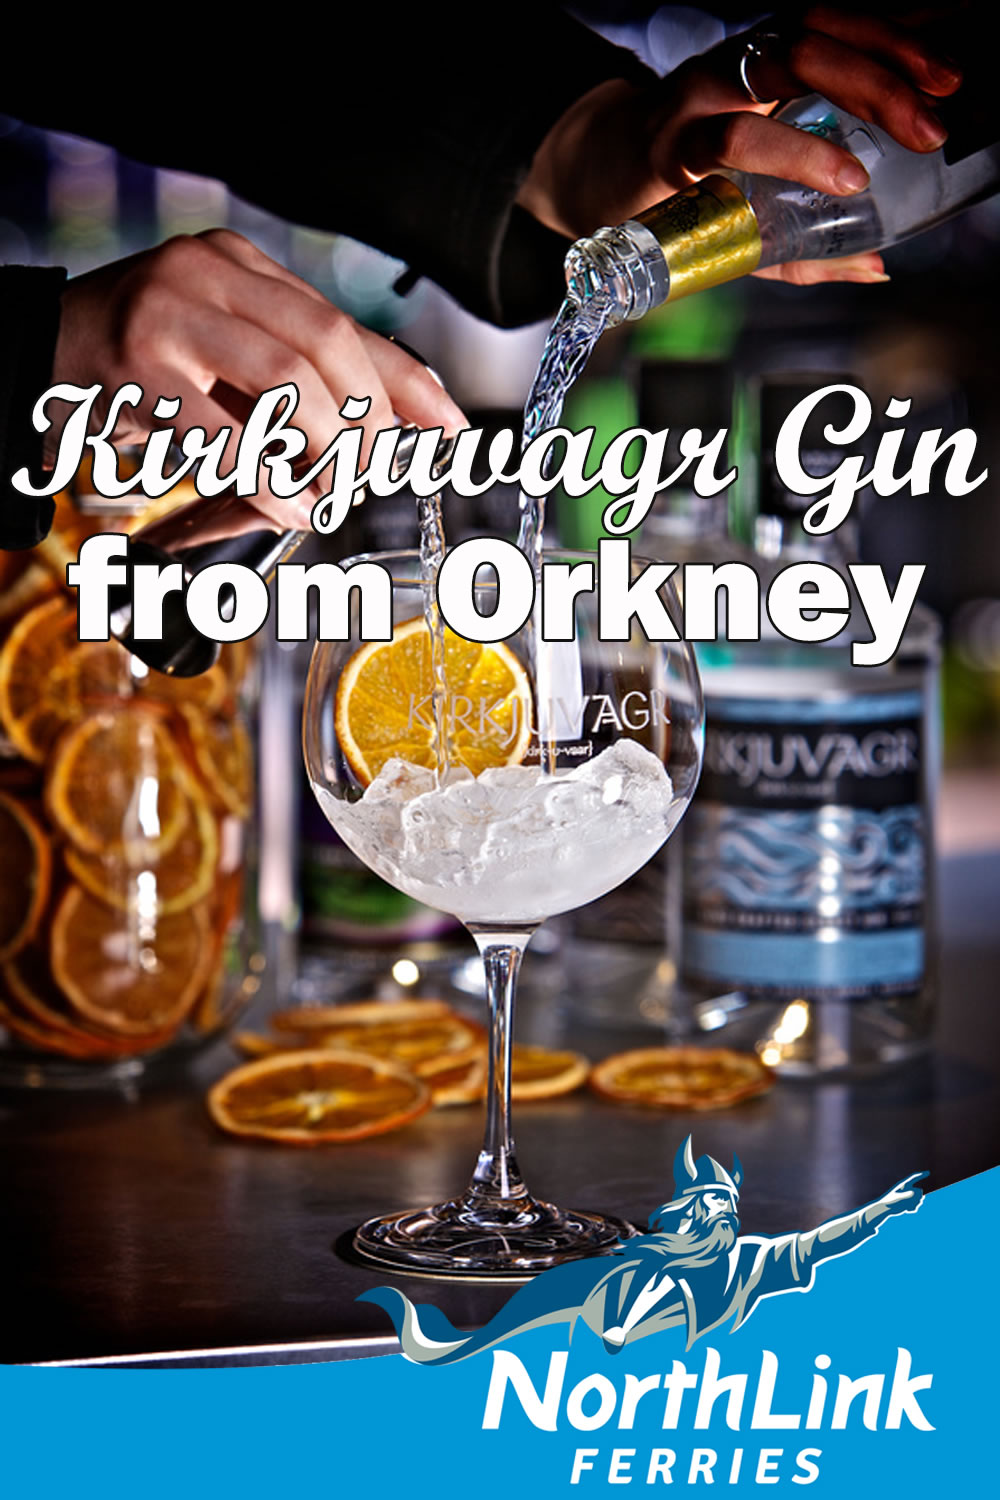 Kirkjuvagr Gin from Orkney